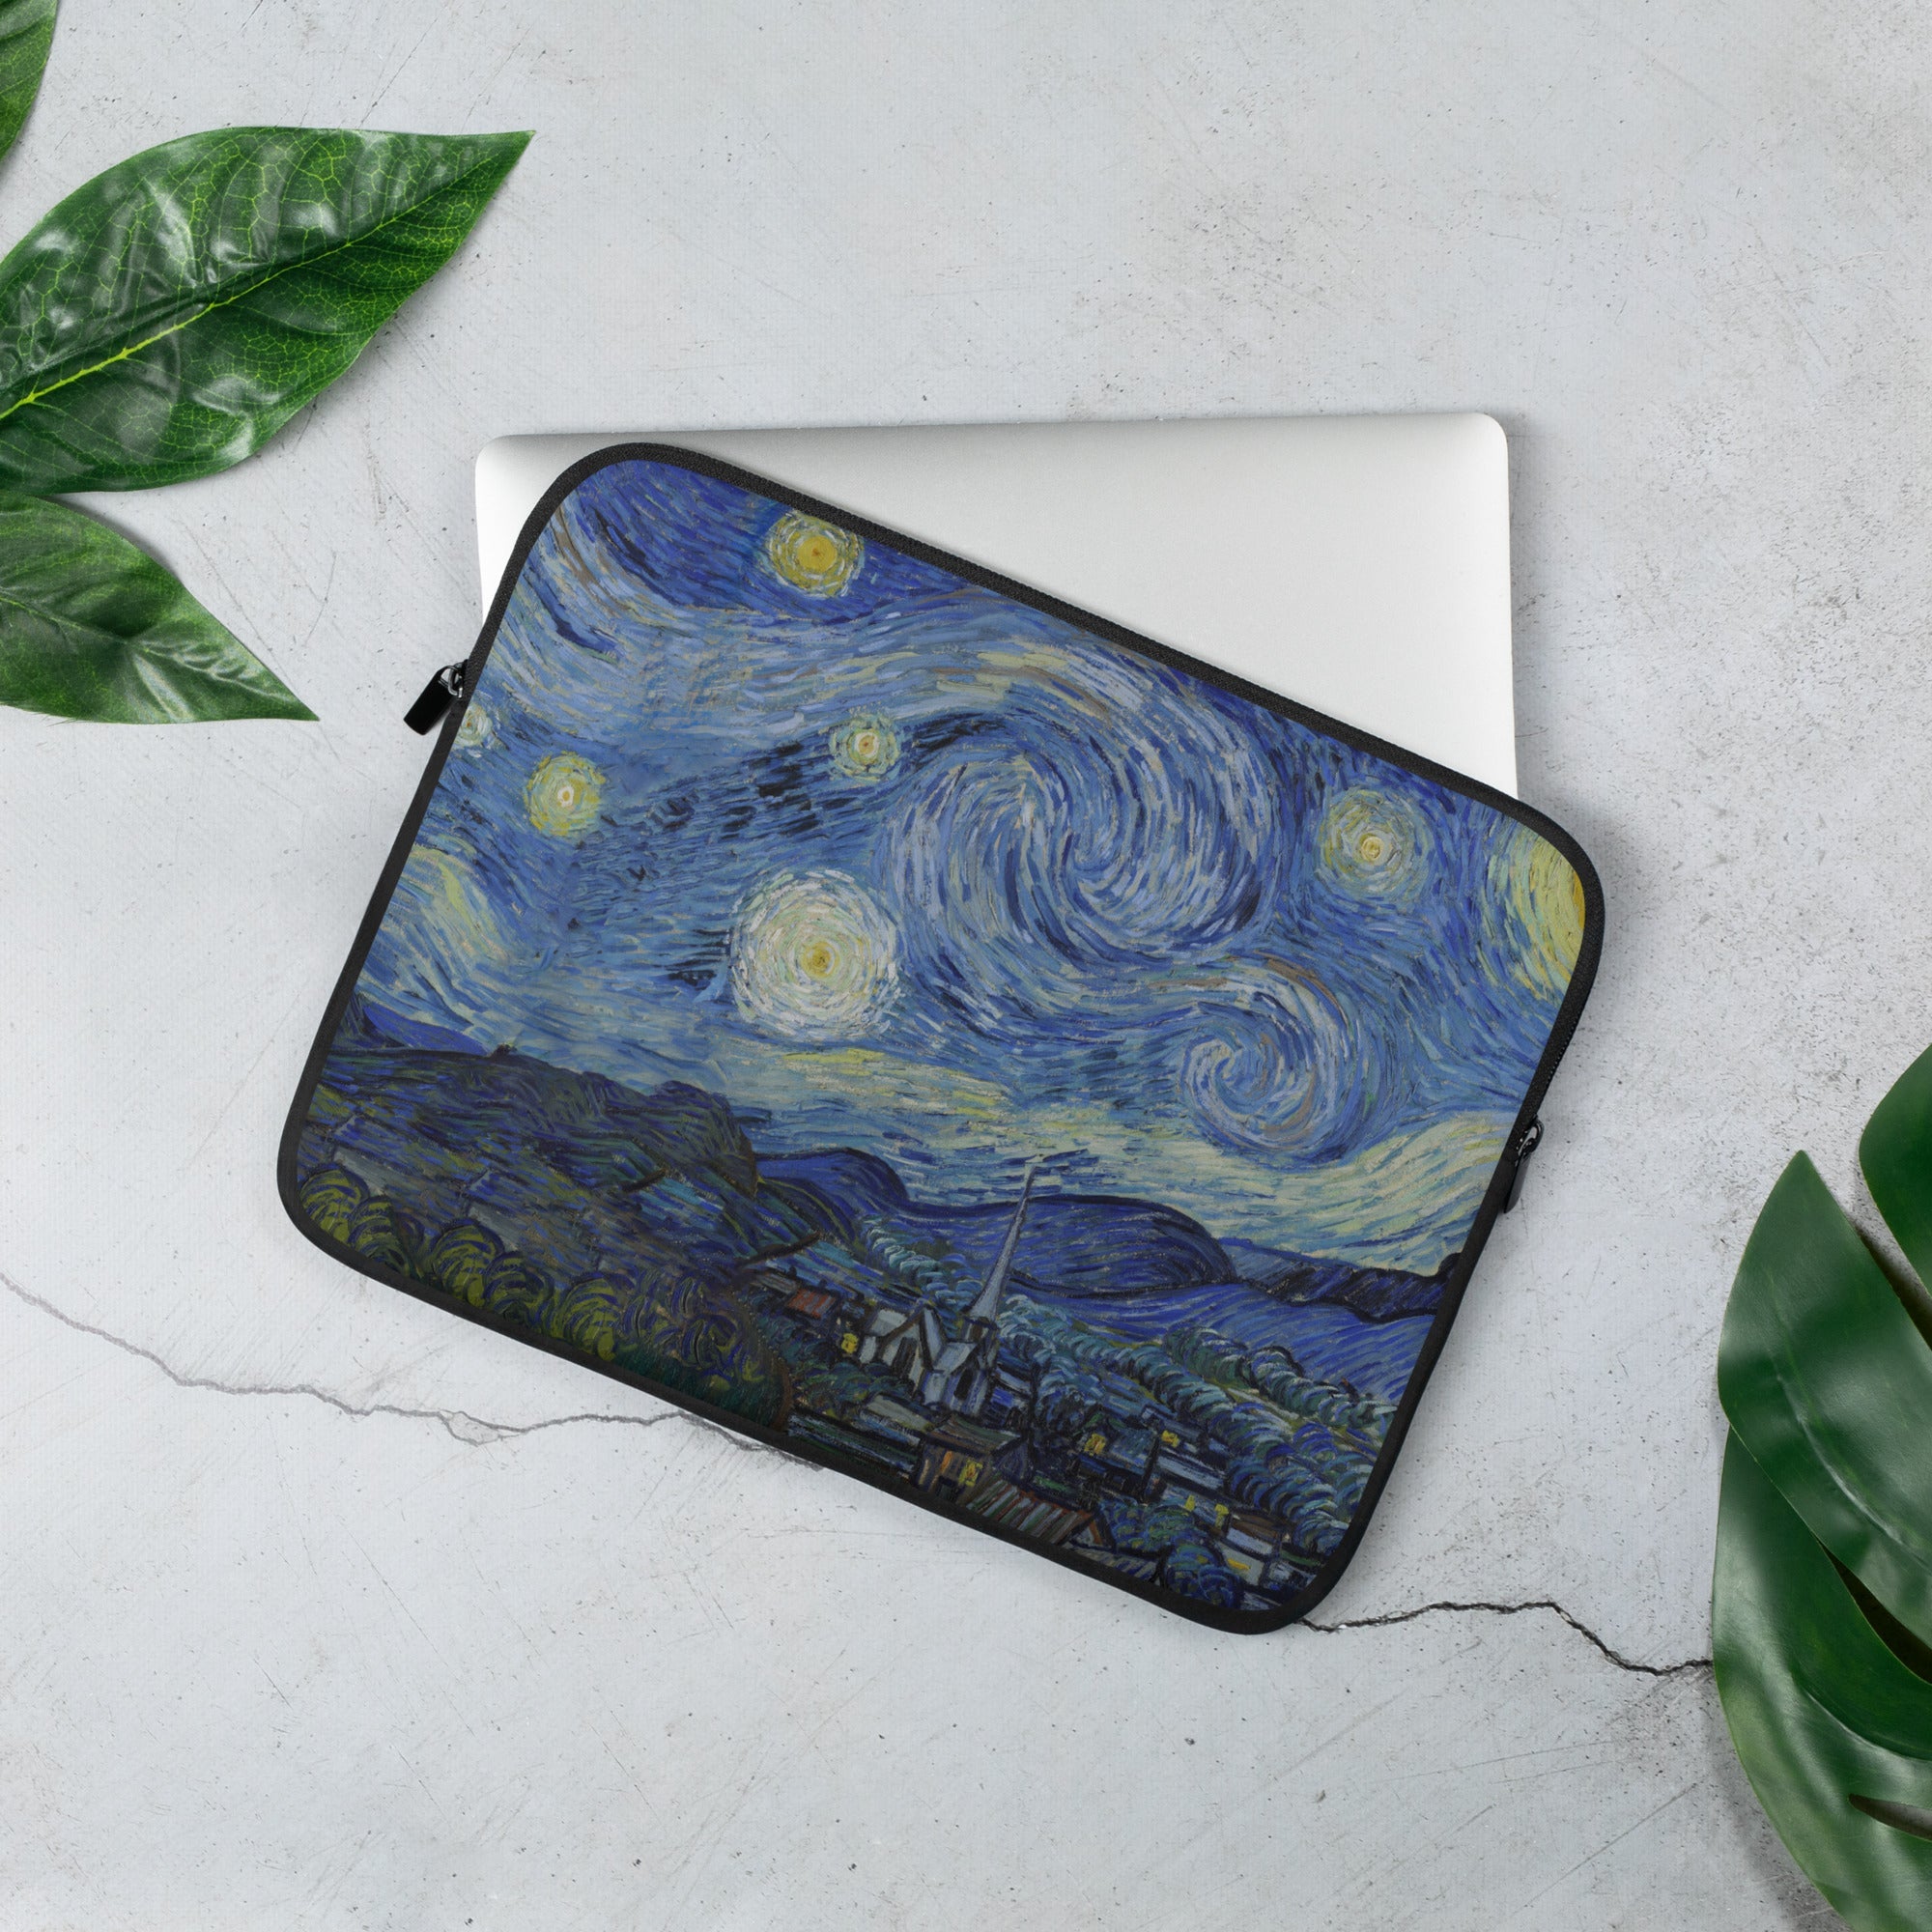 Vincent van Gogh 'Starry Night' Famous Painting Laptop Sleeve | Premium Art Laptop Sleeve